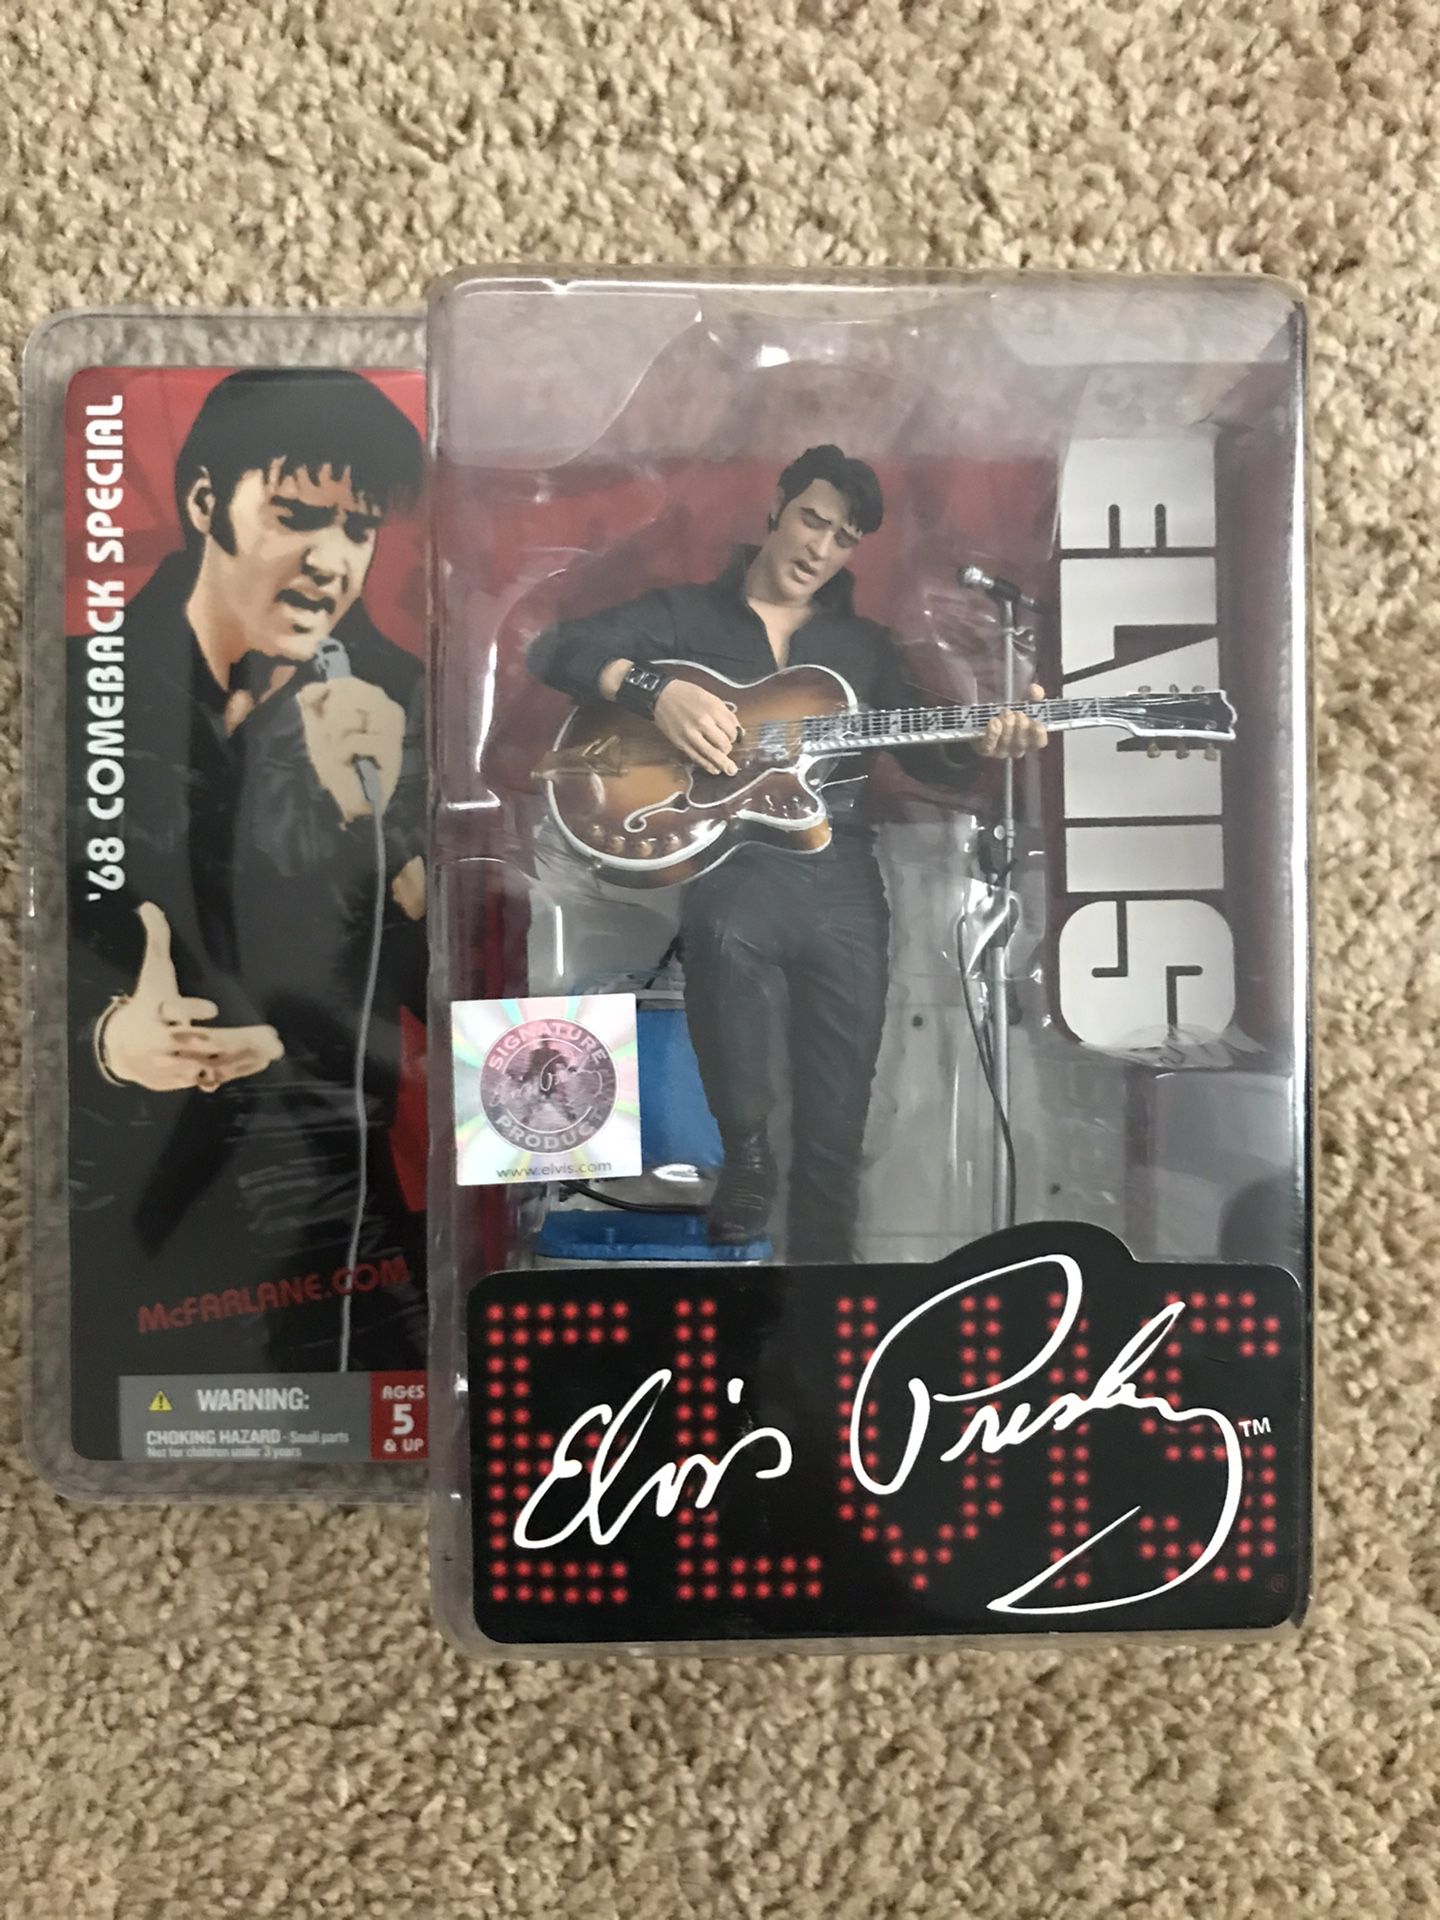 Elvis Presley collecible figurine '68 Comeback- original package, sealed